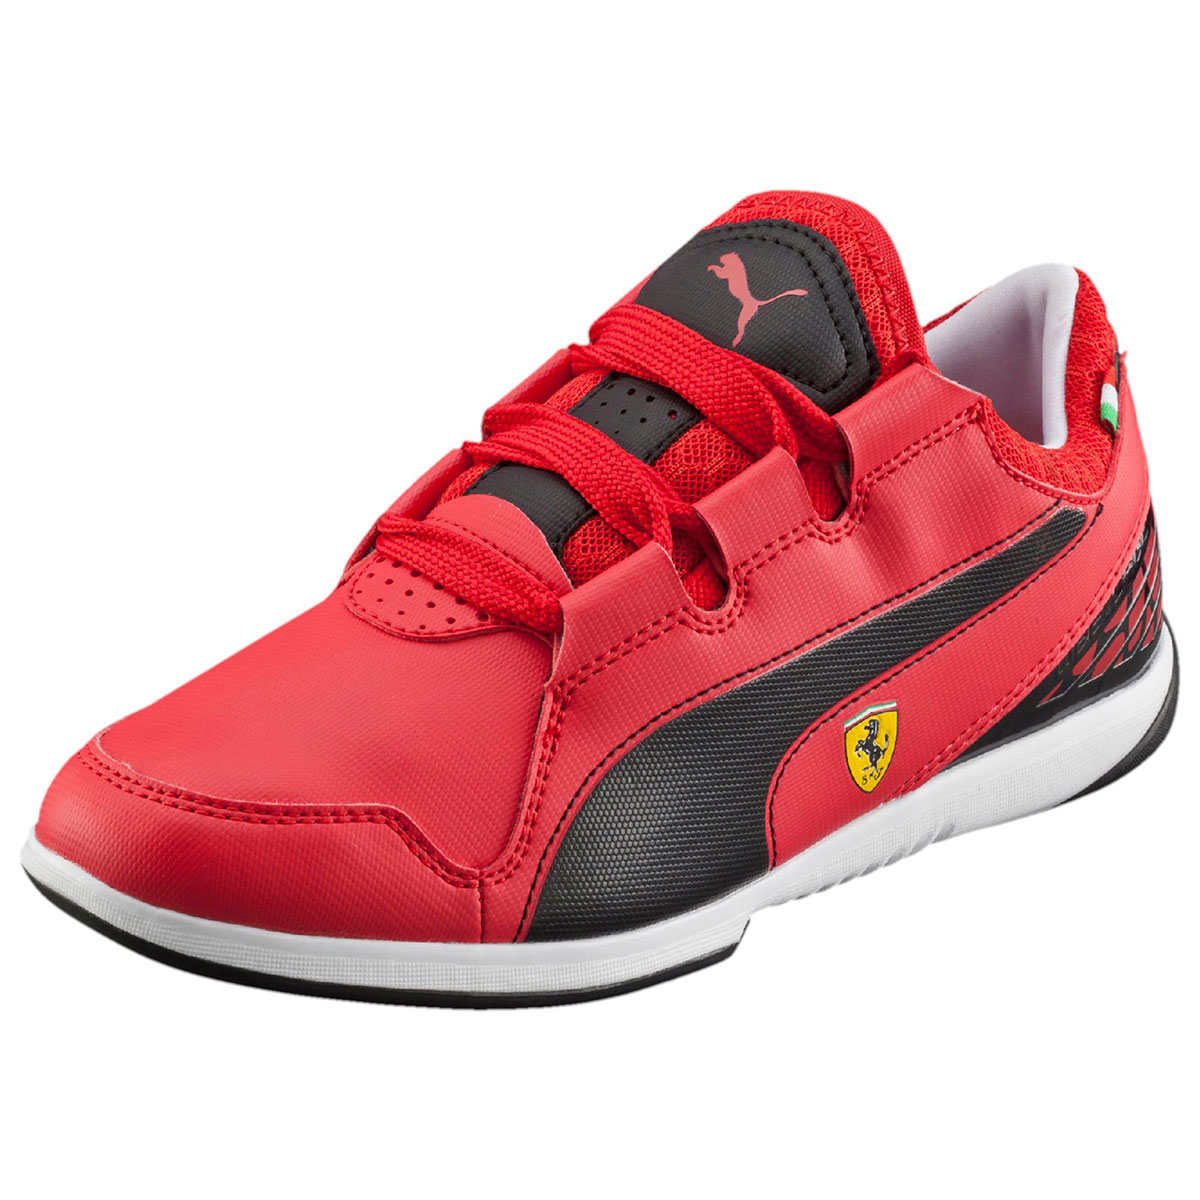 Puma Ferrari Valorosso Jr red Детски спортни обувки 304956-11